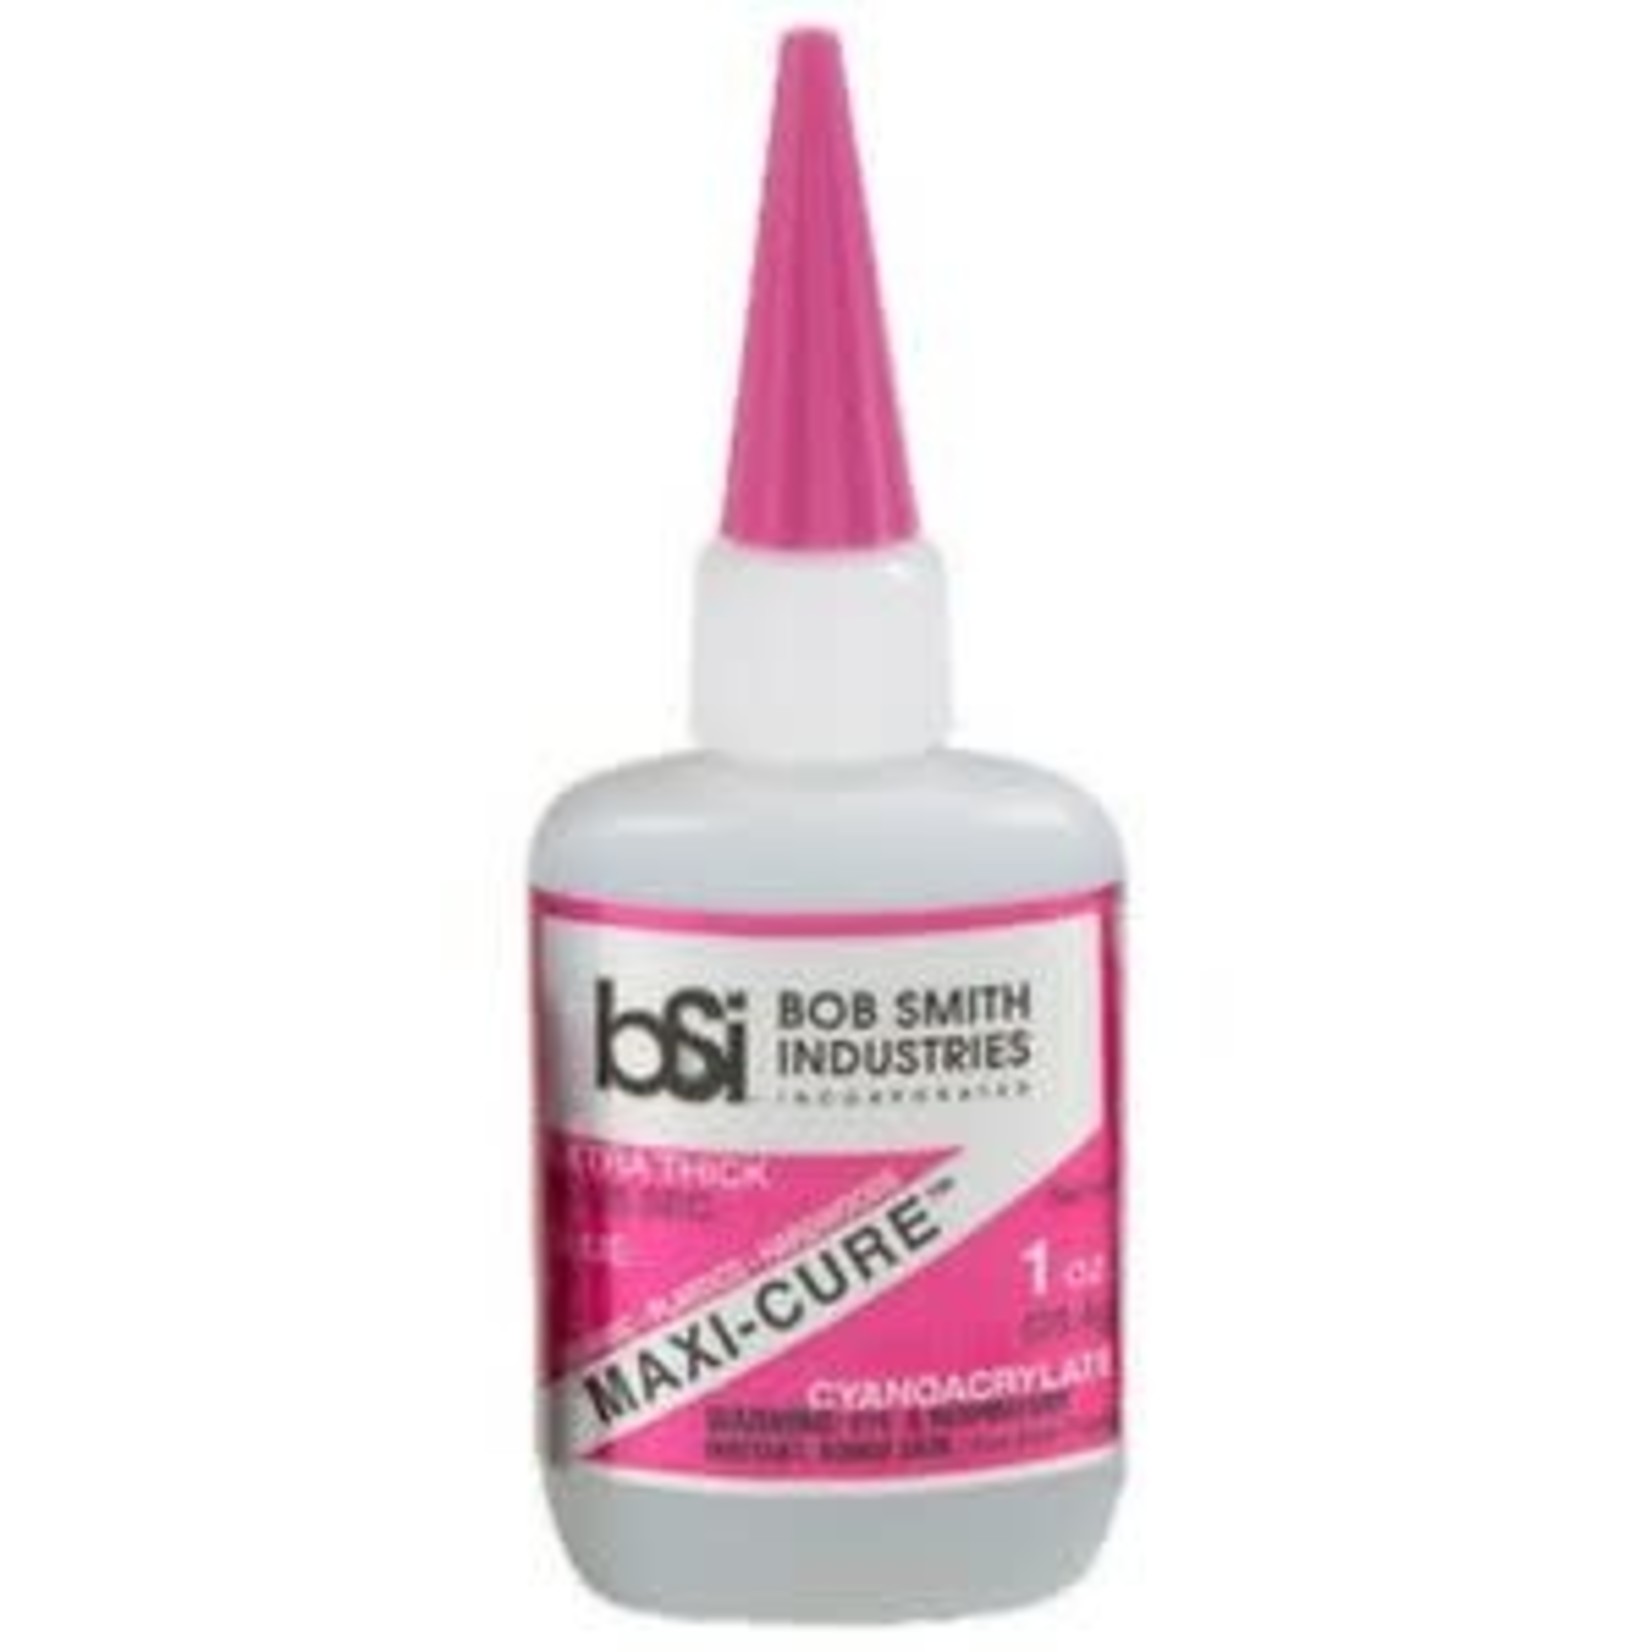 Bob Smith Industries Maxi-Cure Thick Gap Filling CA 1oz Pink